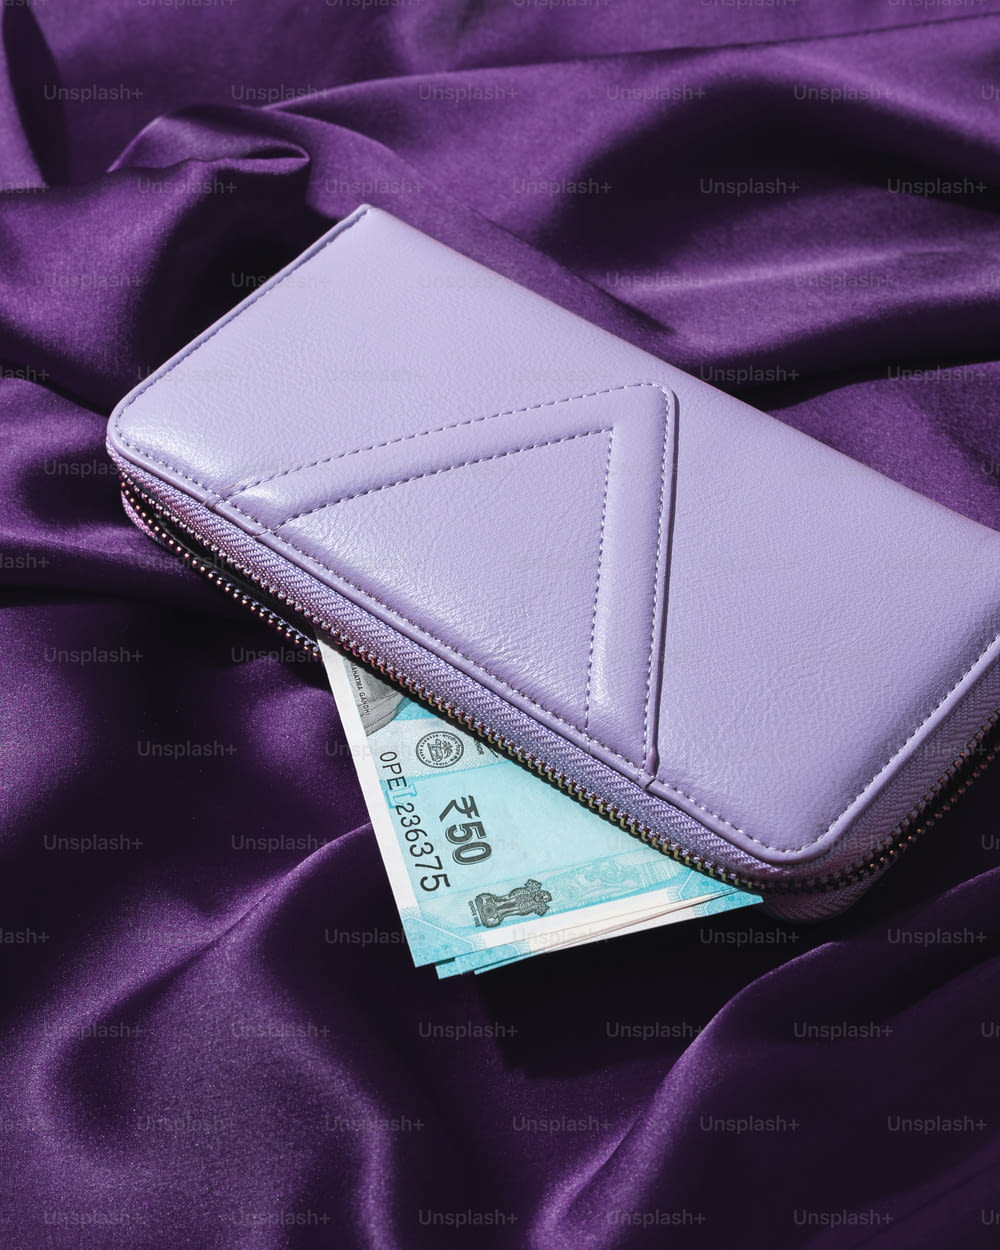 Una billetera púrpura encima de una tela púrpura